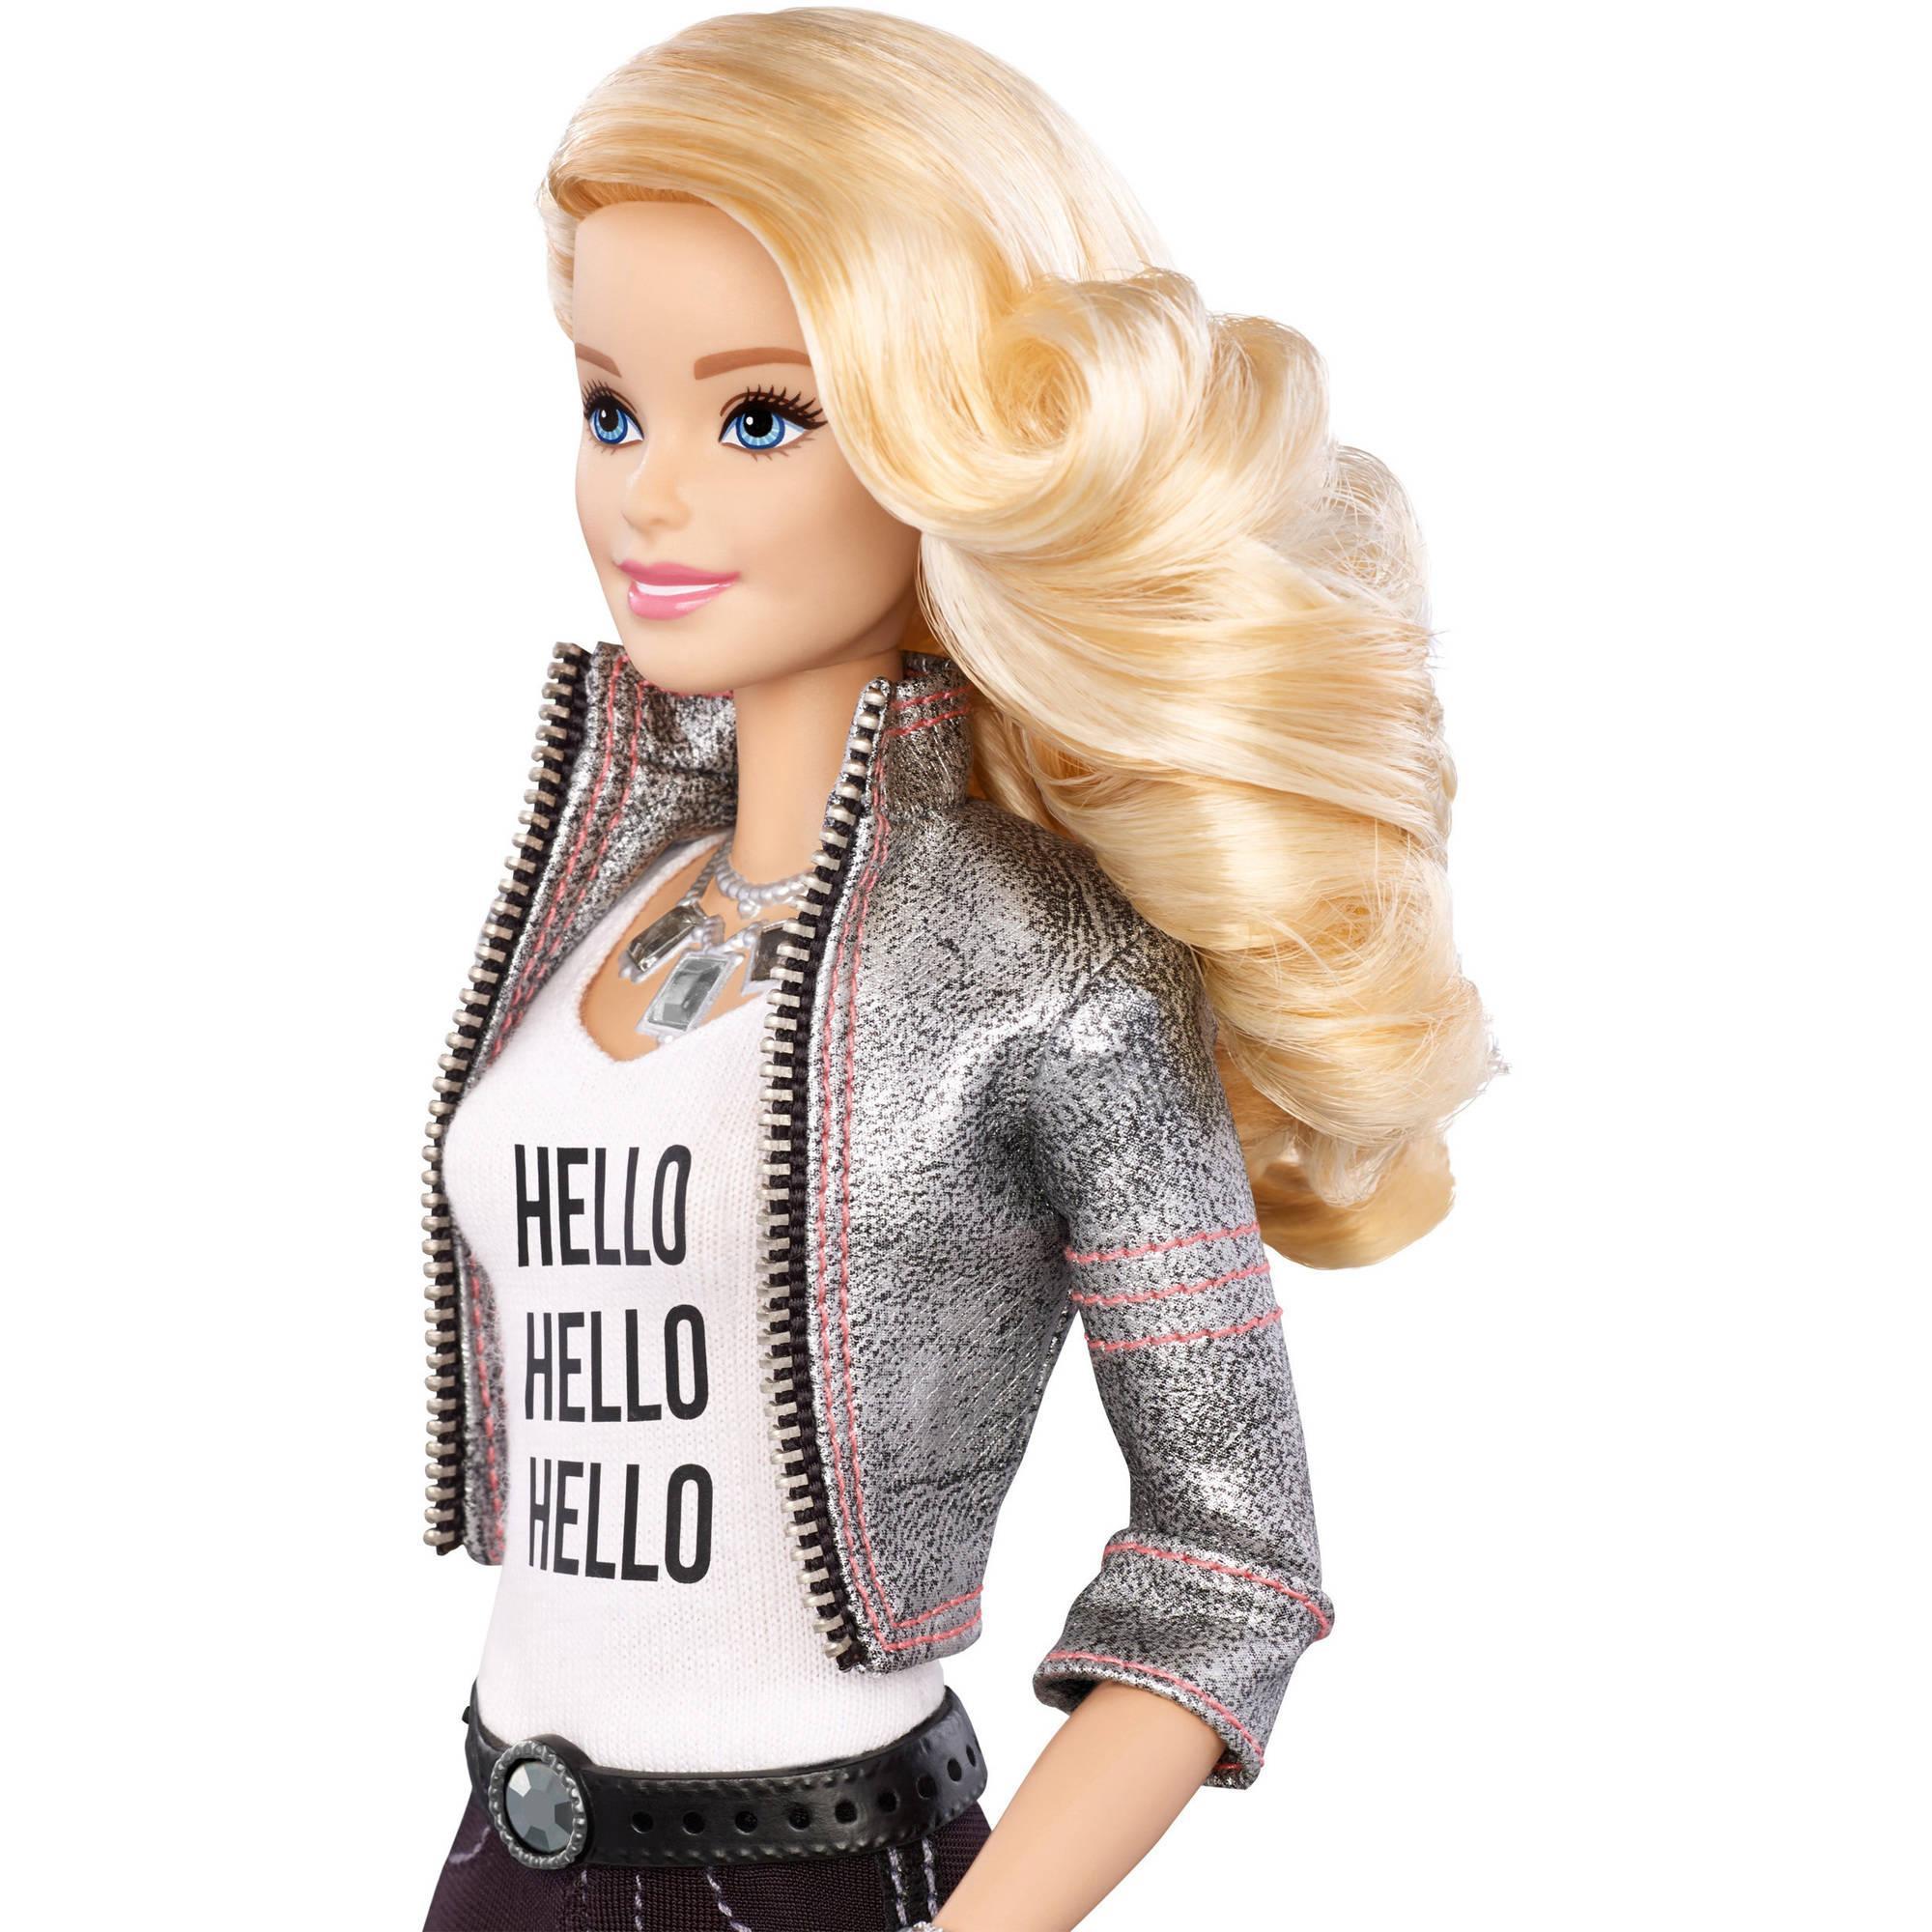 Cute Barbie doll wallpaper for Desktop